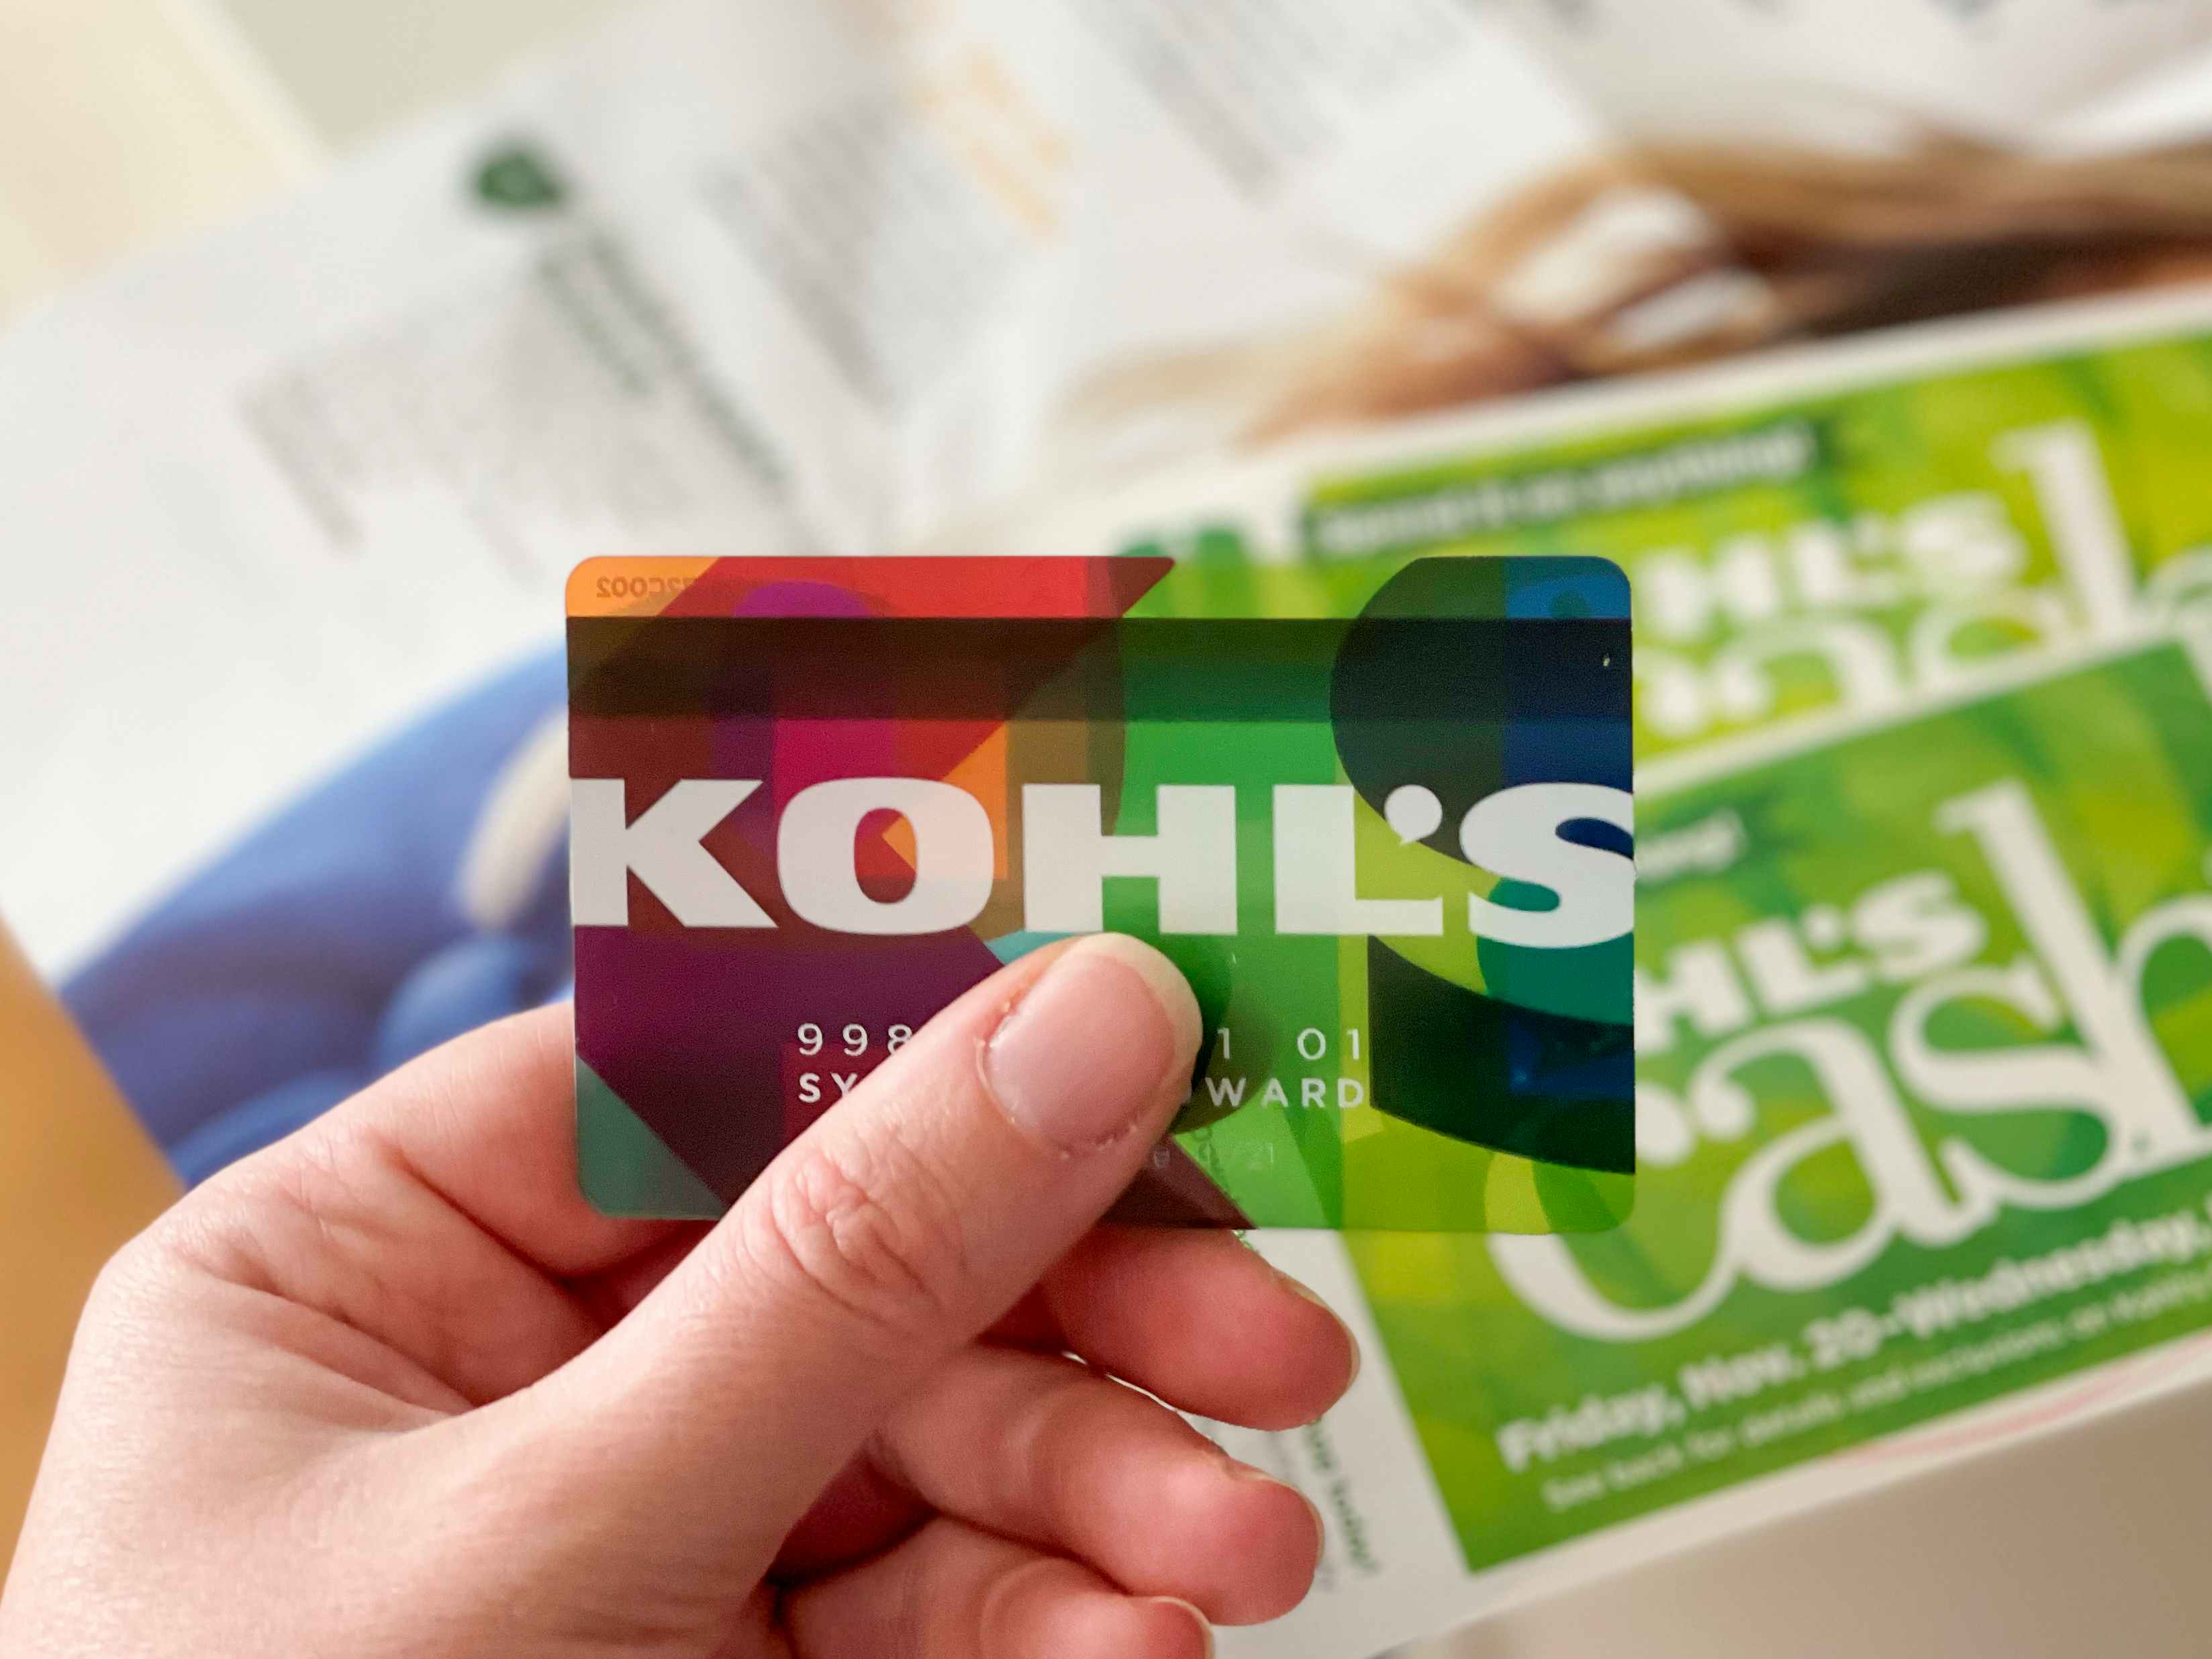 Free Printable Kohls Coupons  Kohls coupons, Free printable coupons, Kohls  promo codes